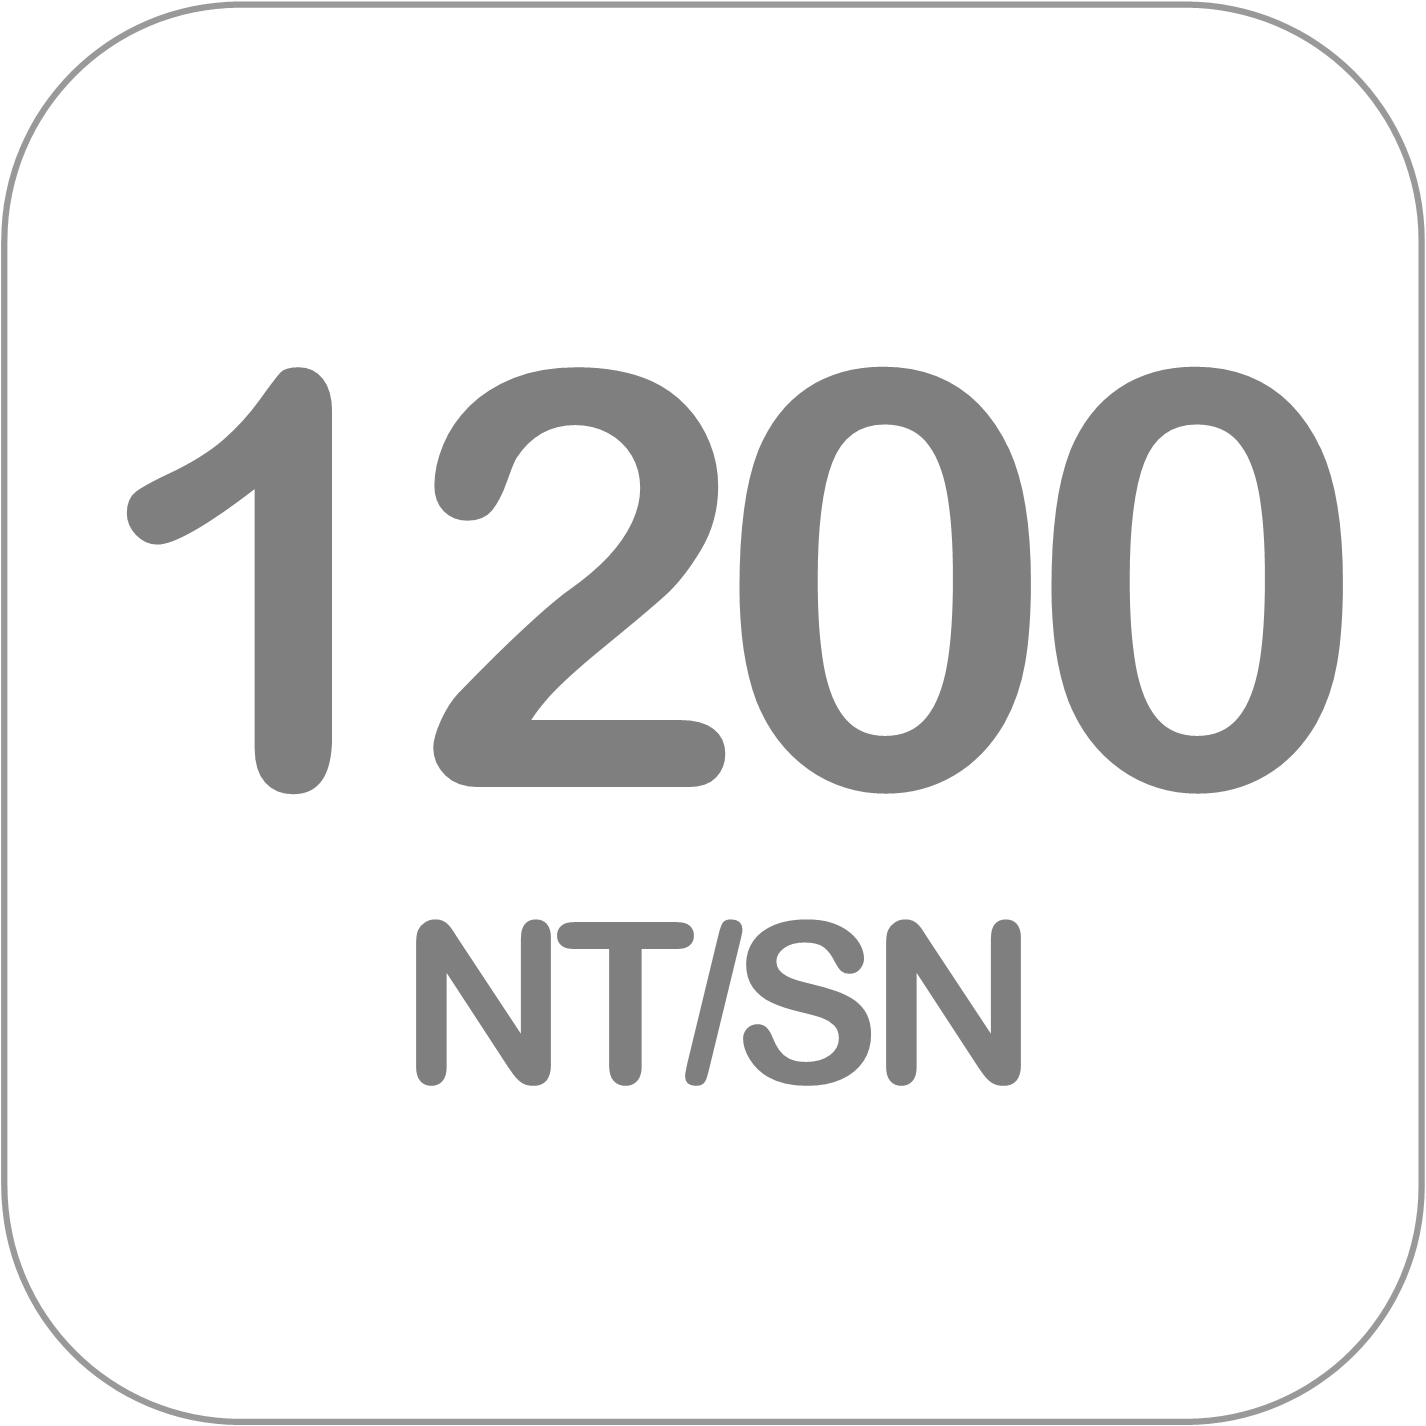 Volquete 1200 NT/SN